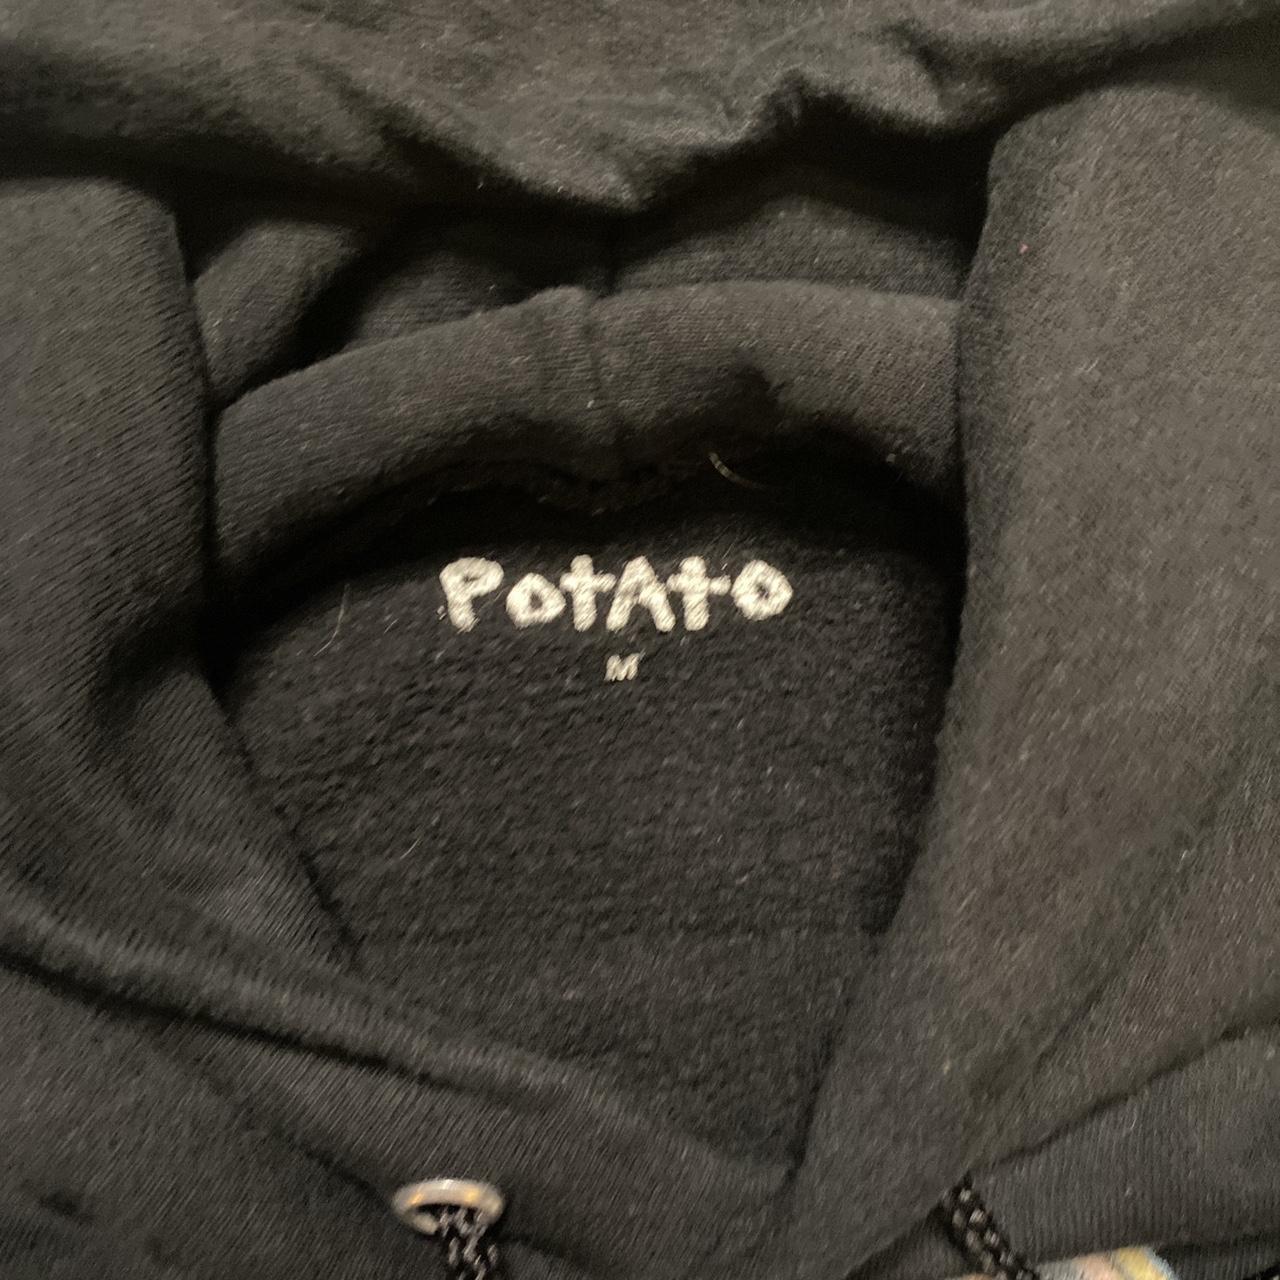 imran potato hoodie